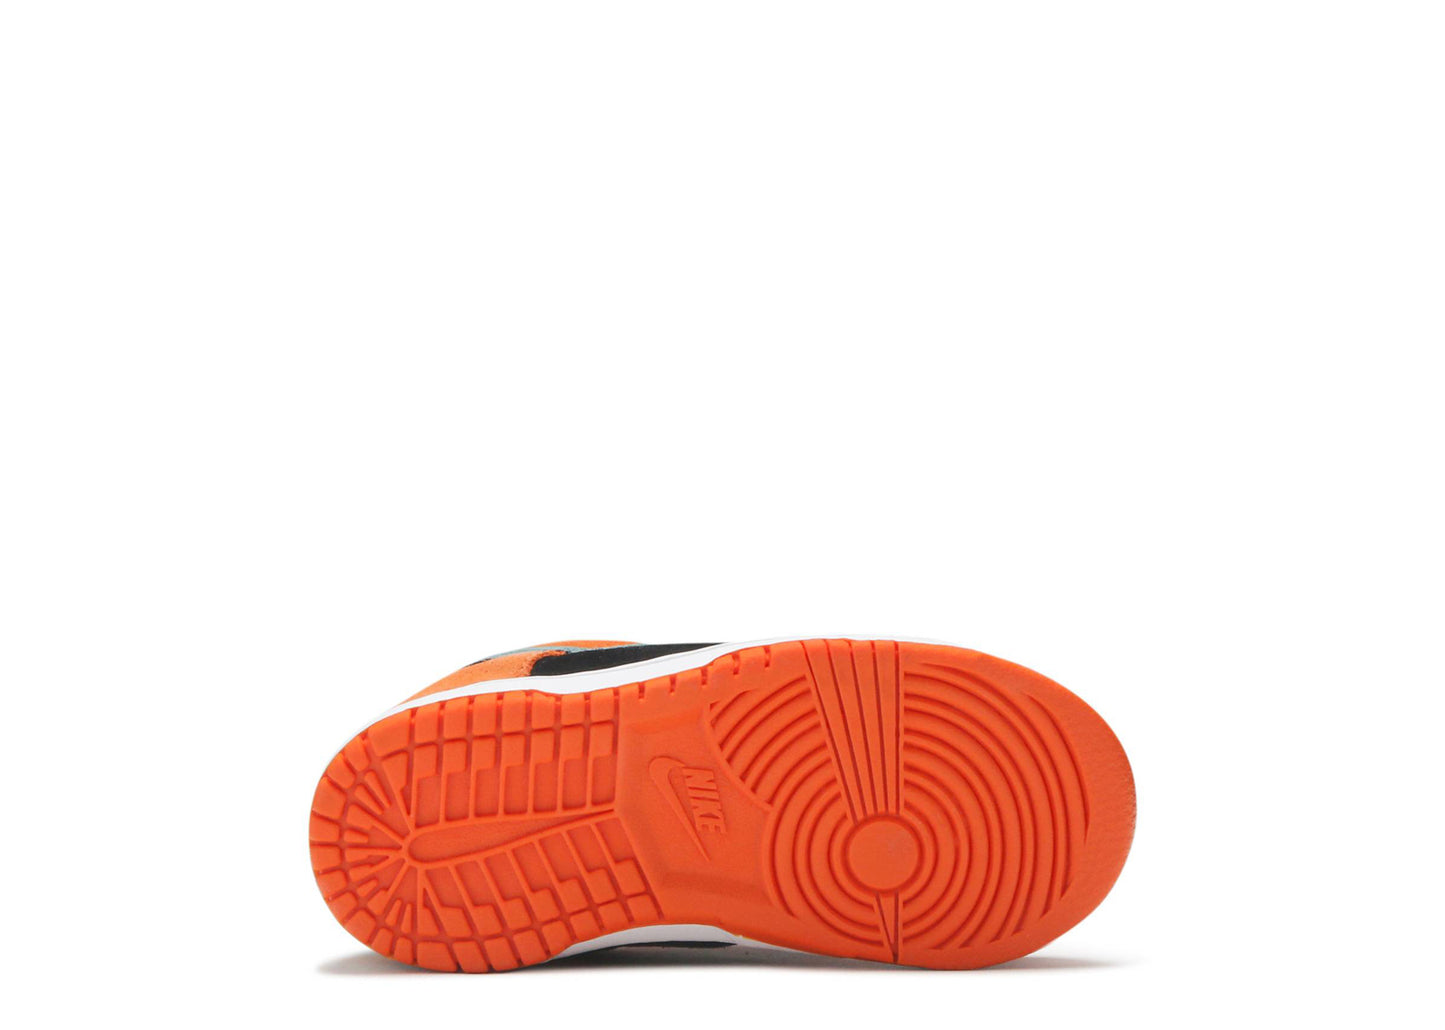 Nike Dunk Low SP TD "Ceramic" 2020